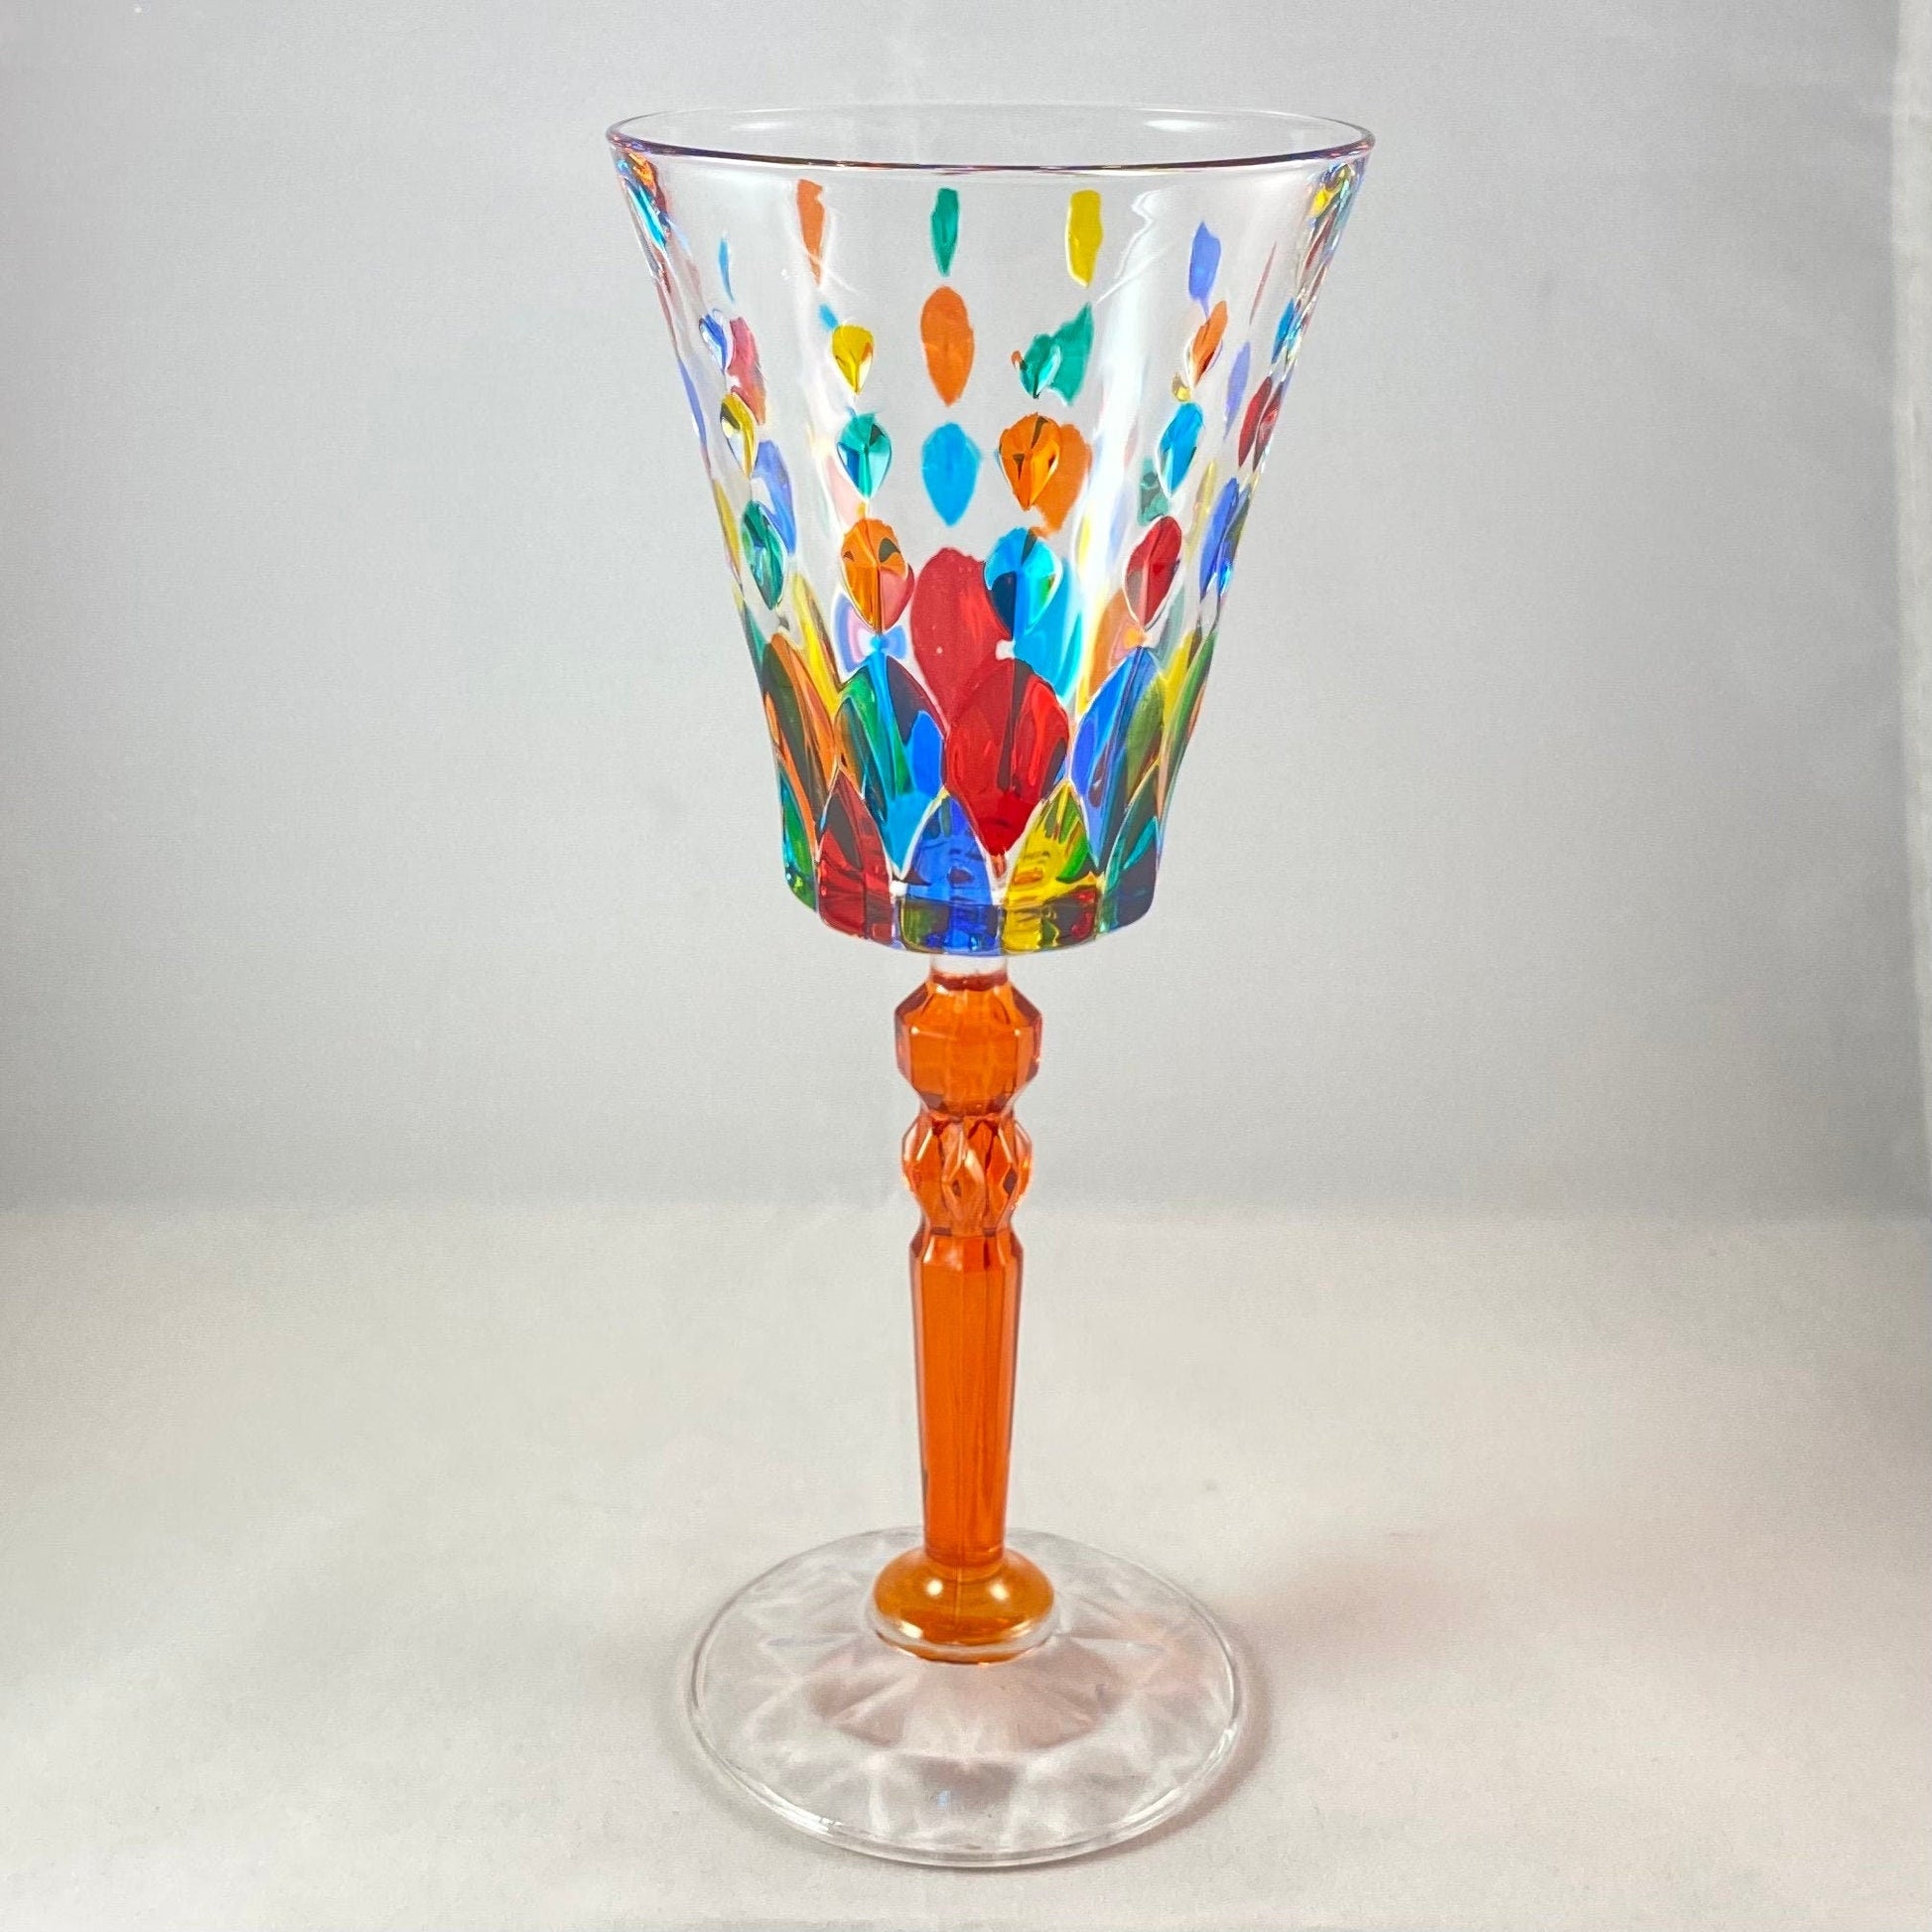 Orange Stem Marilyn Venetian Glass Wine Glass - Handmade in Italy, Colorful Murano Glass